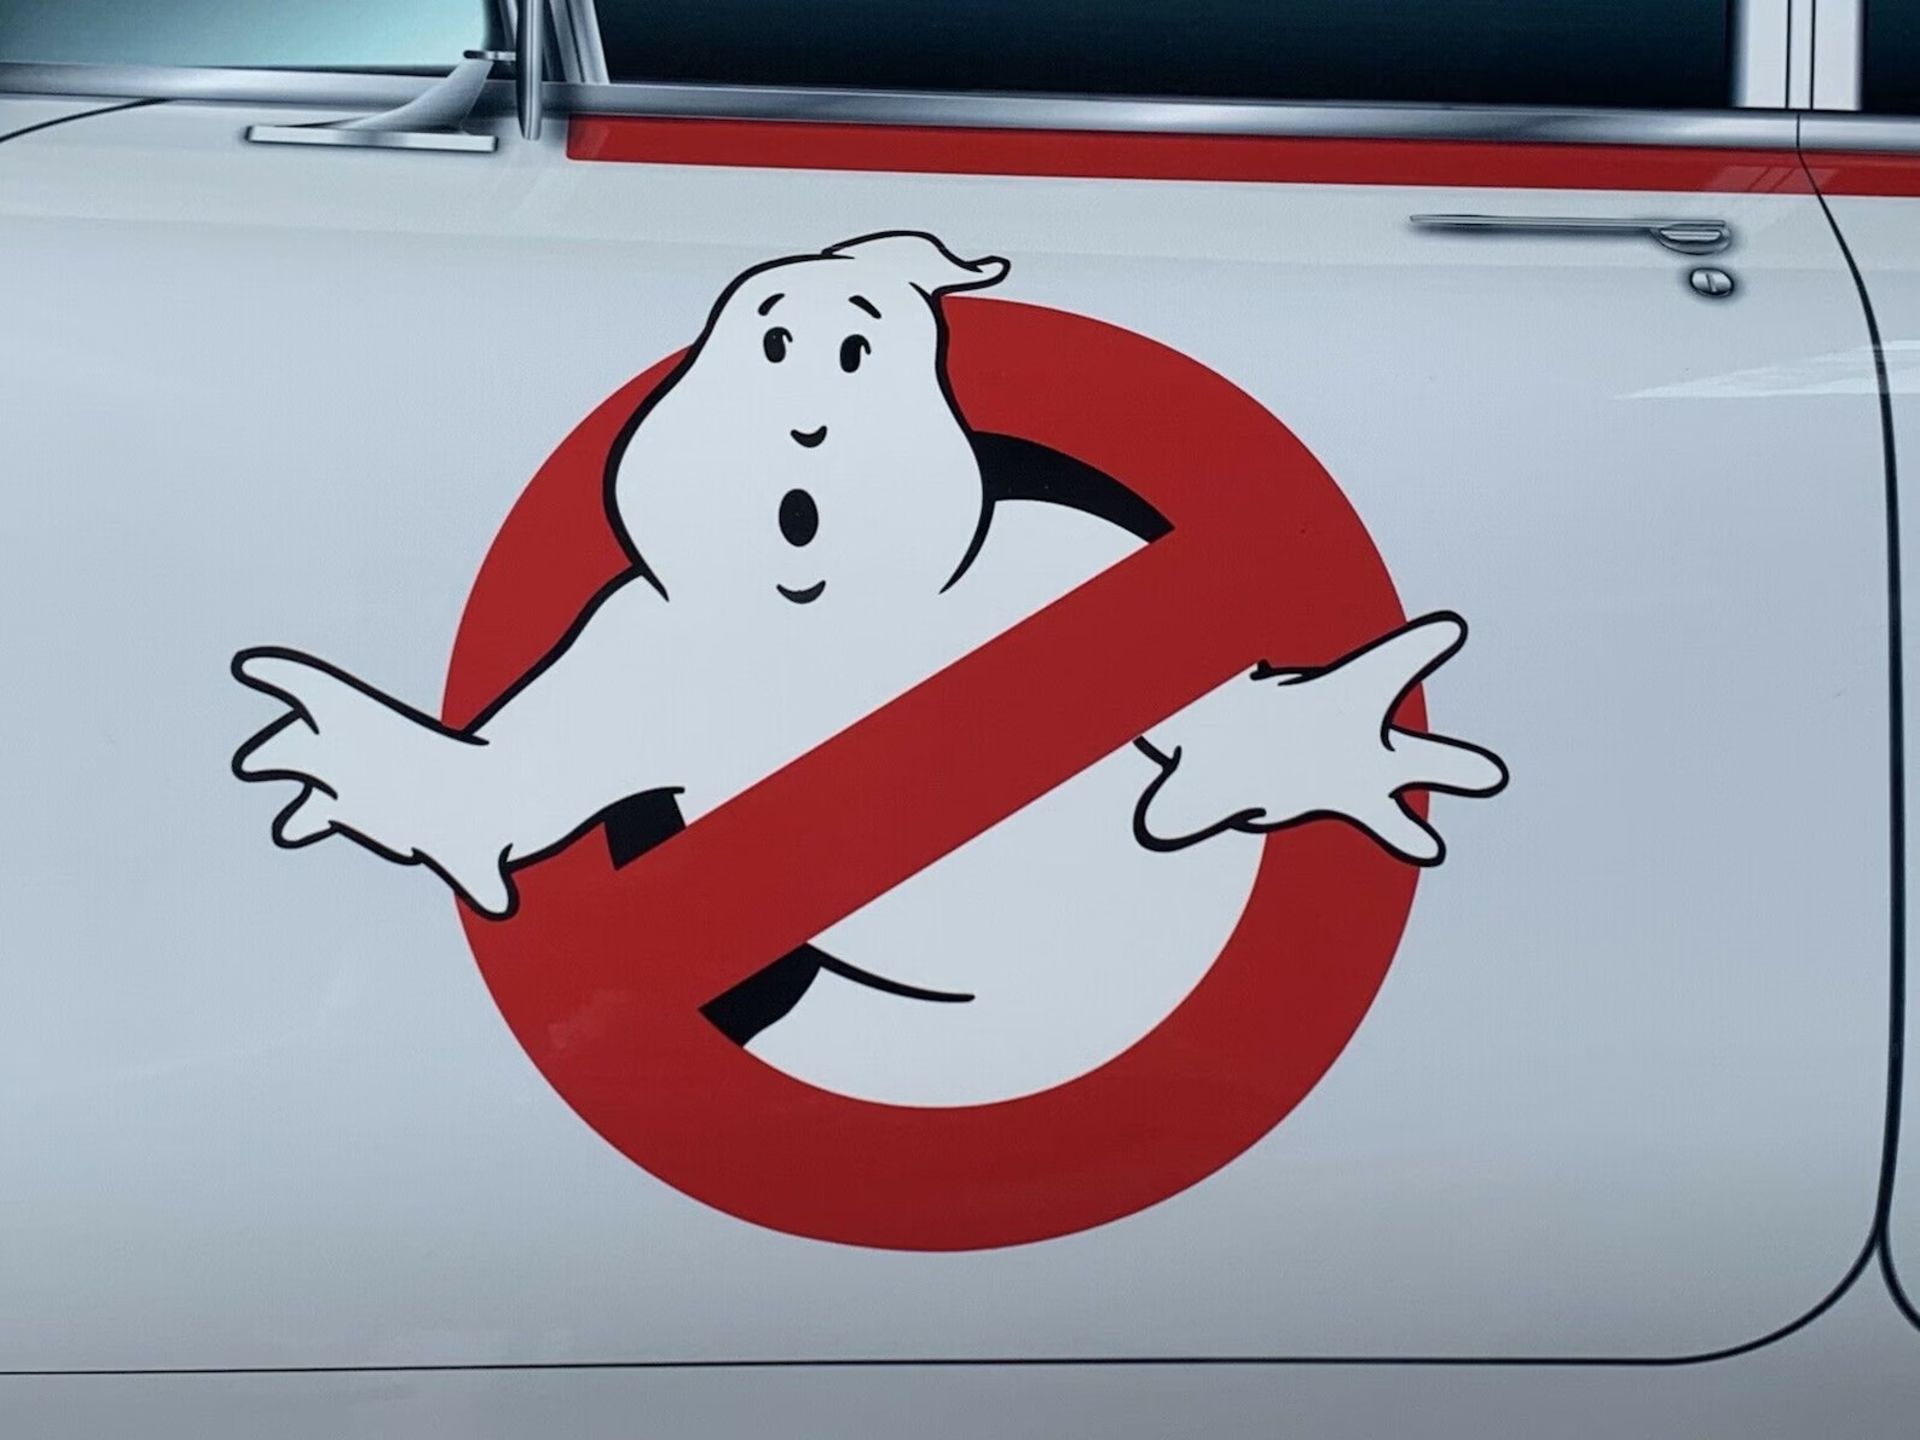 Ghostbusters Car Garage Display - Image 3 of 3